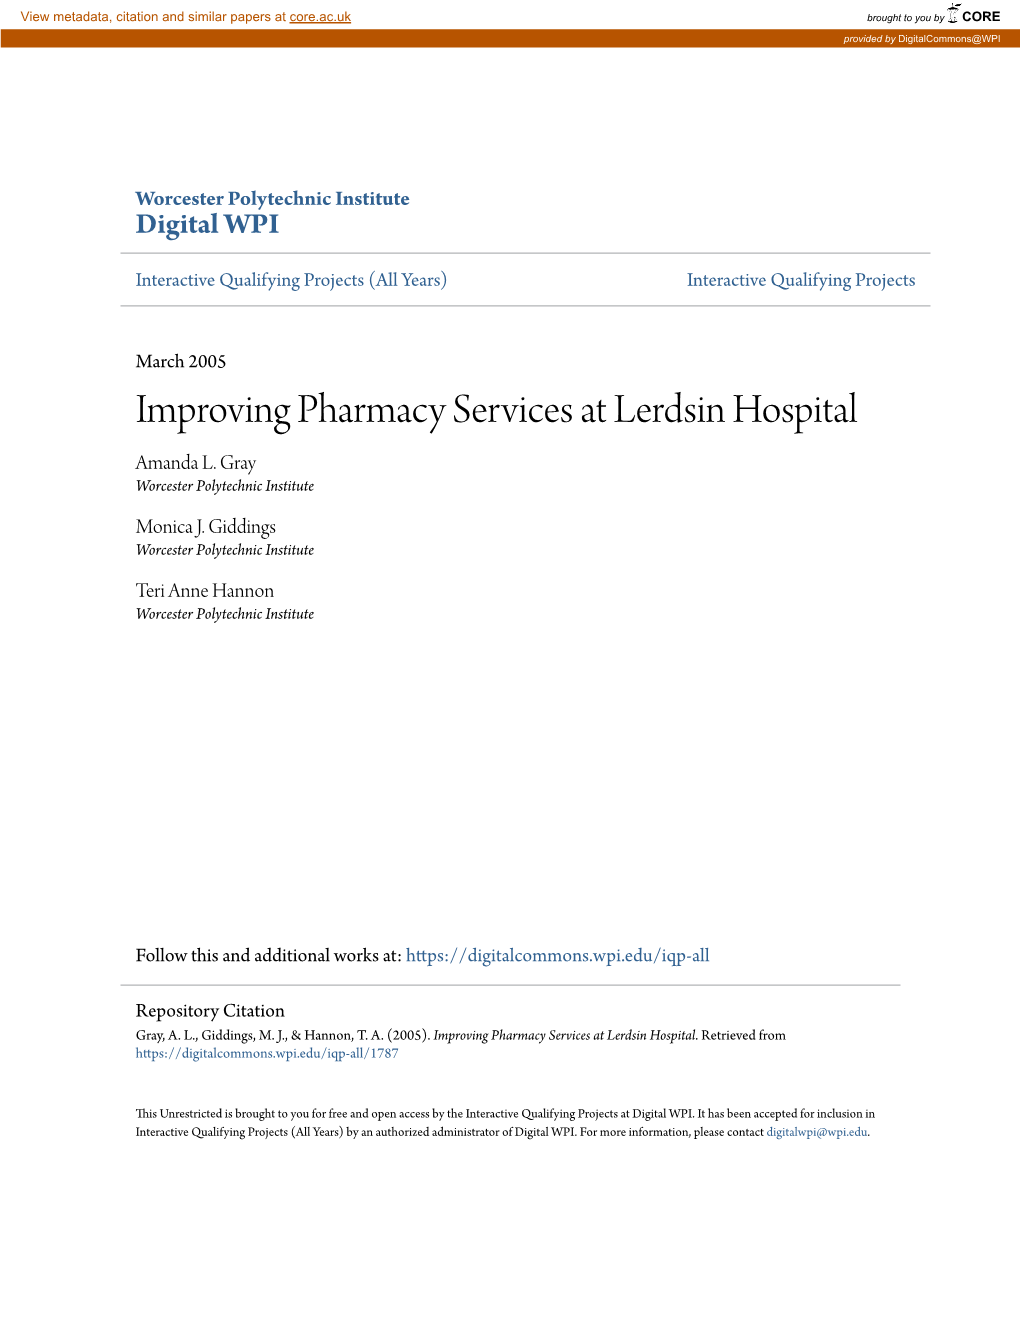 Improving Pharmacy Services at Lerdsin Hospital Amanda L